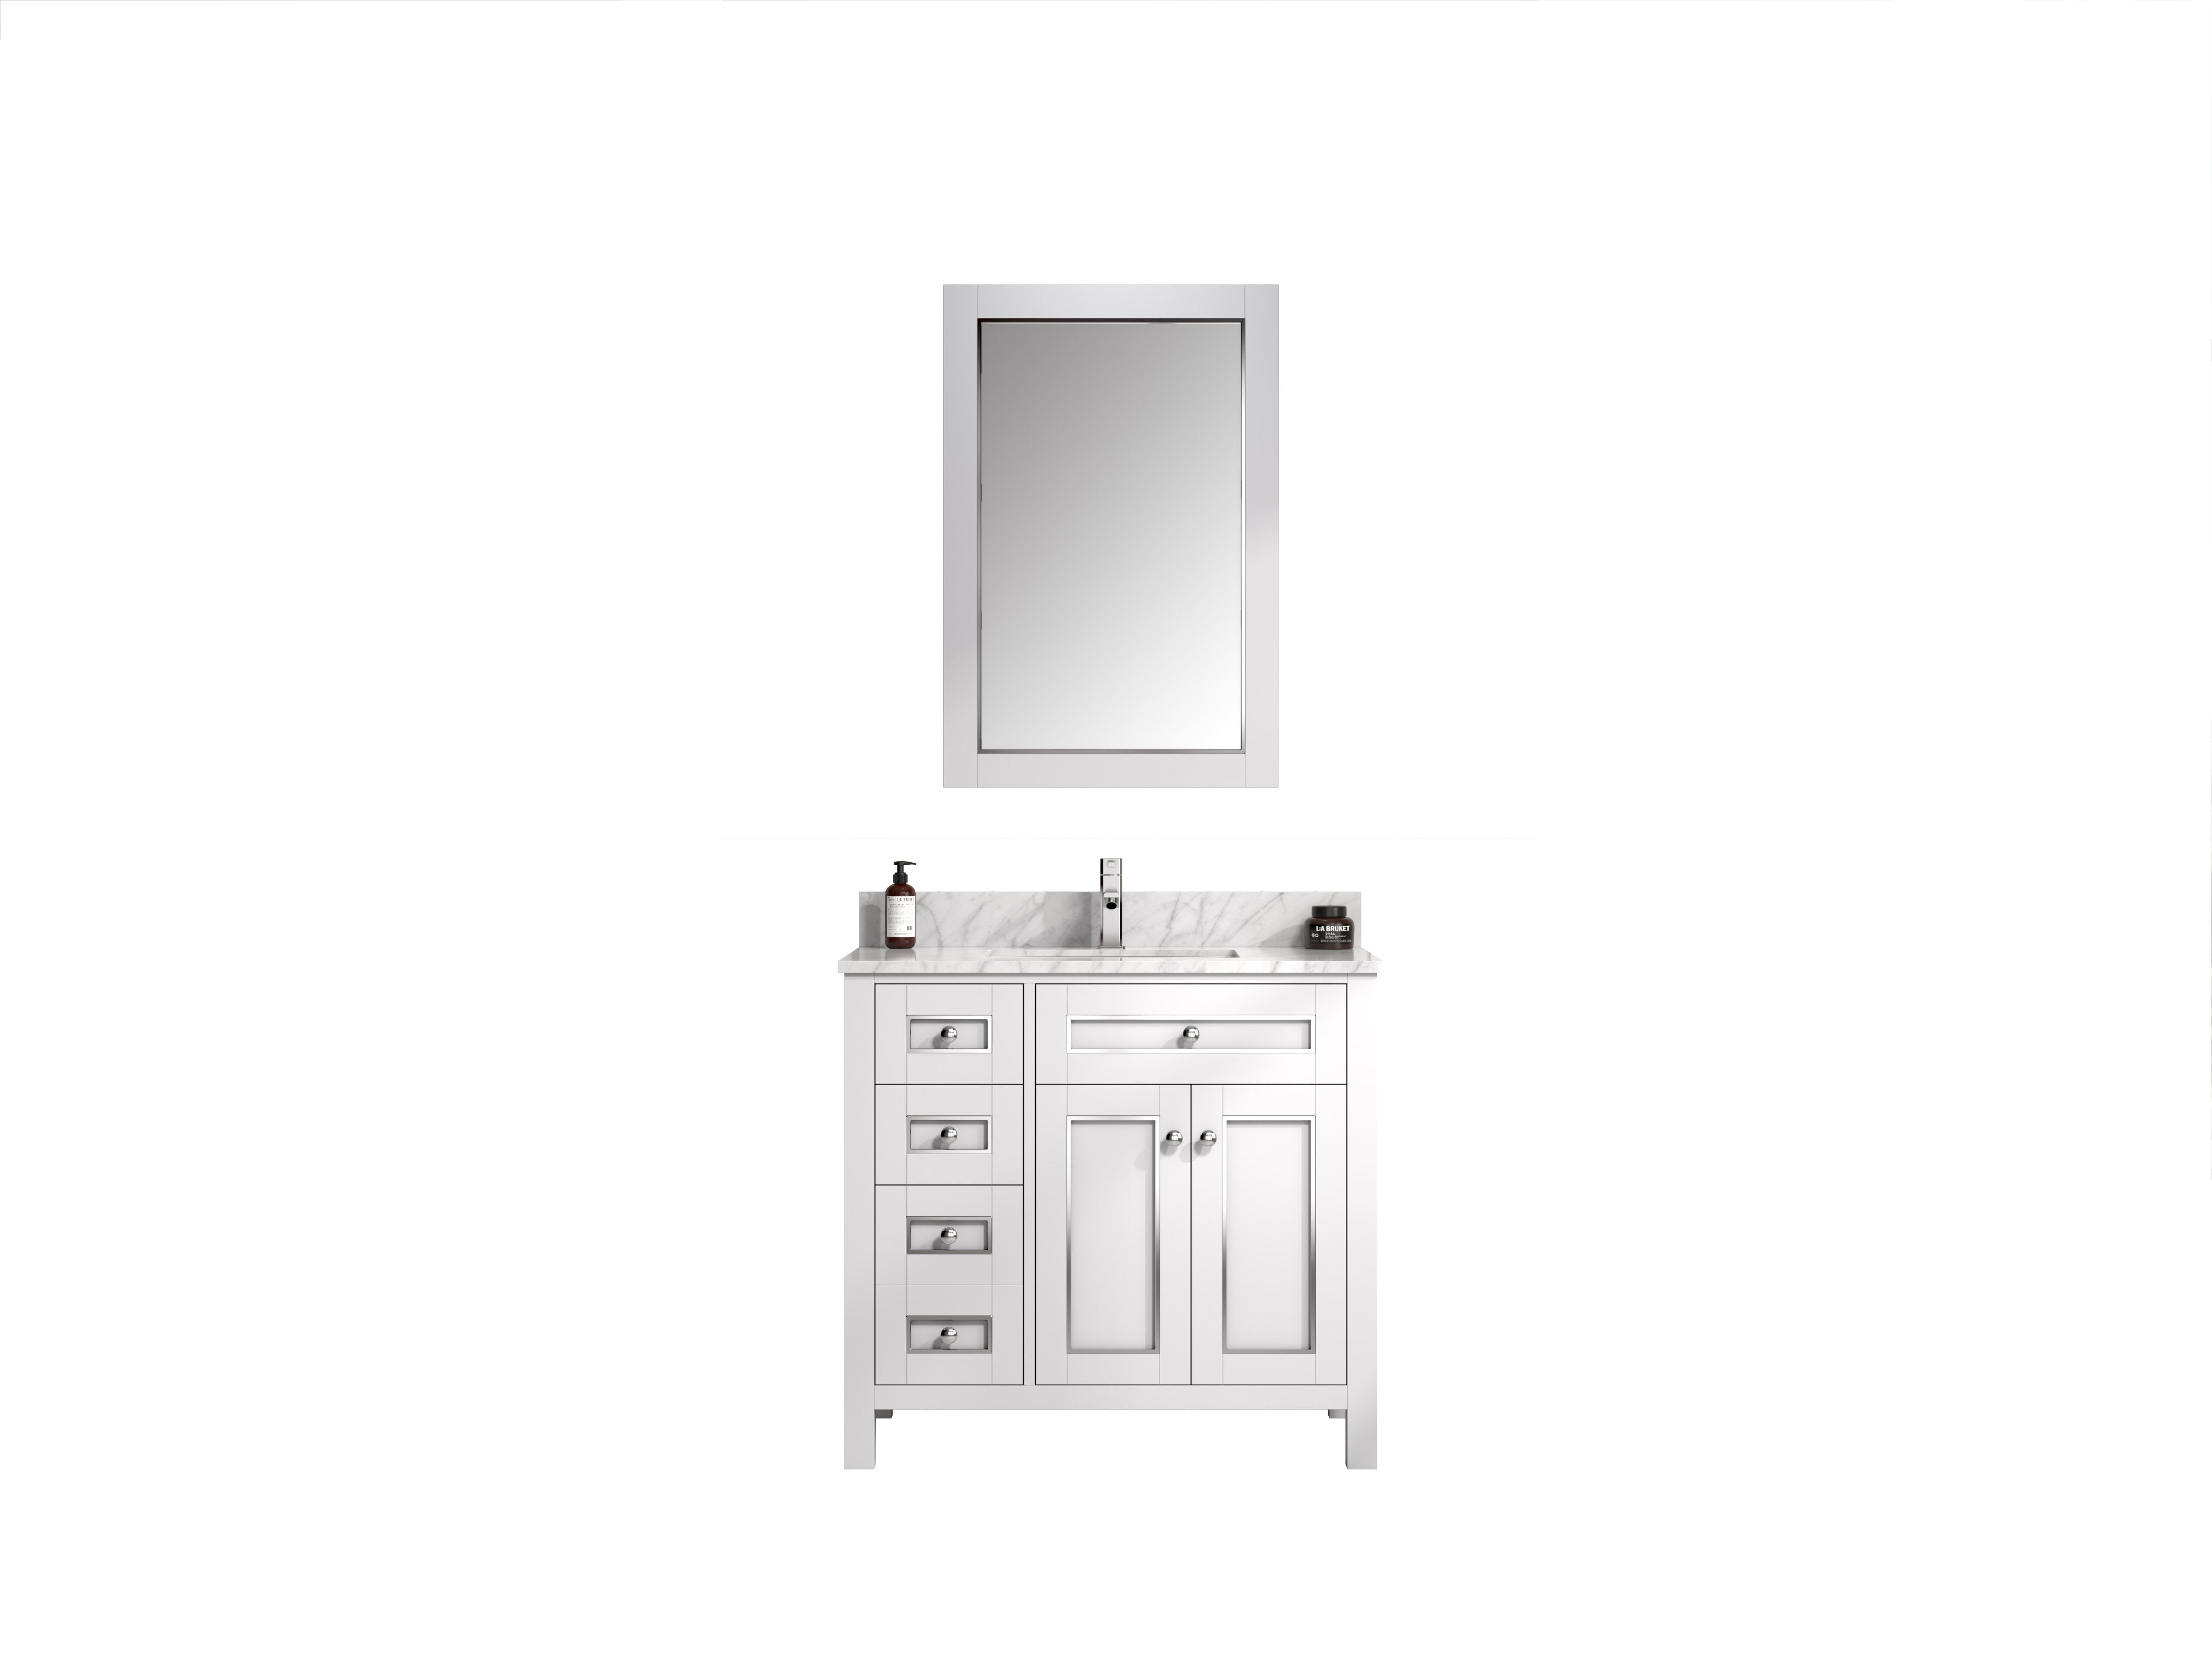 24"x36" Bathroom Mirror